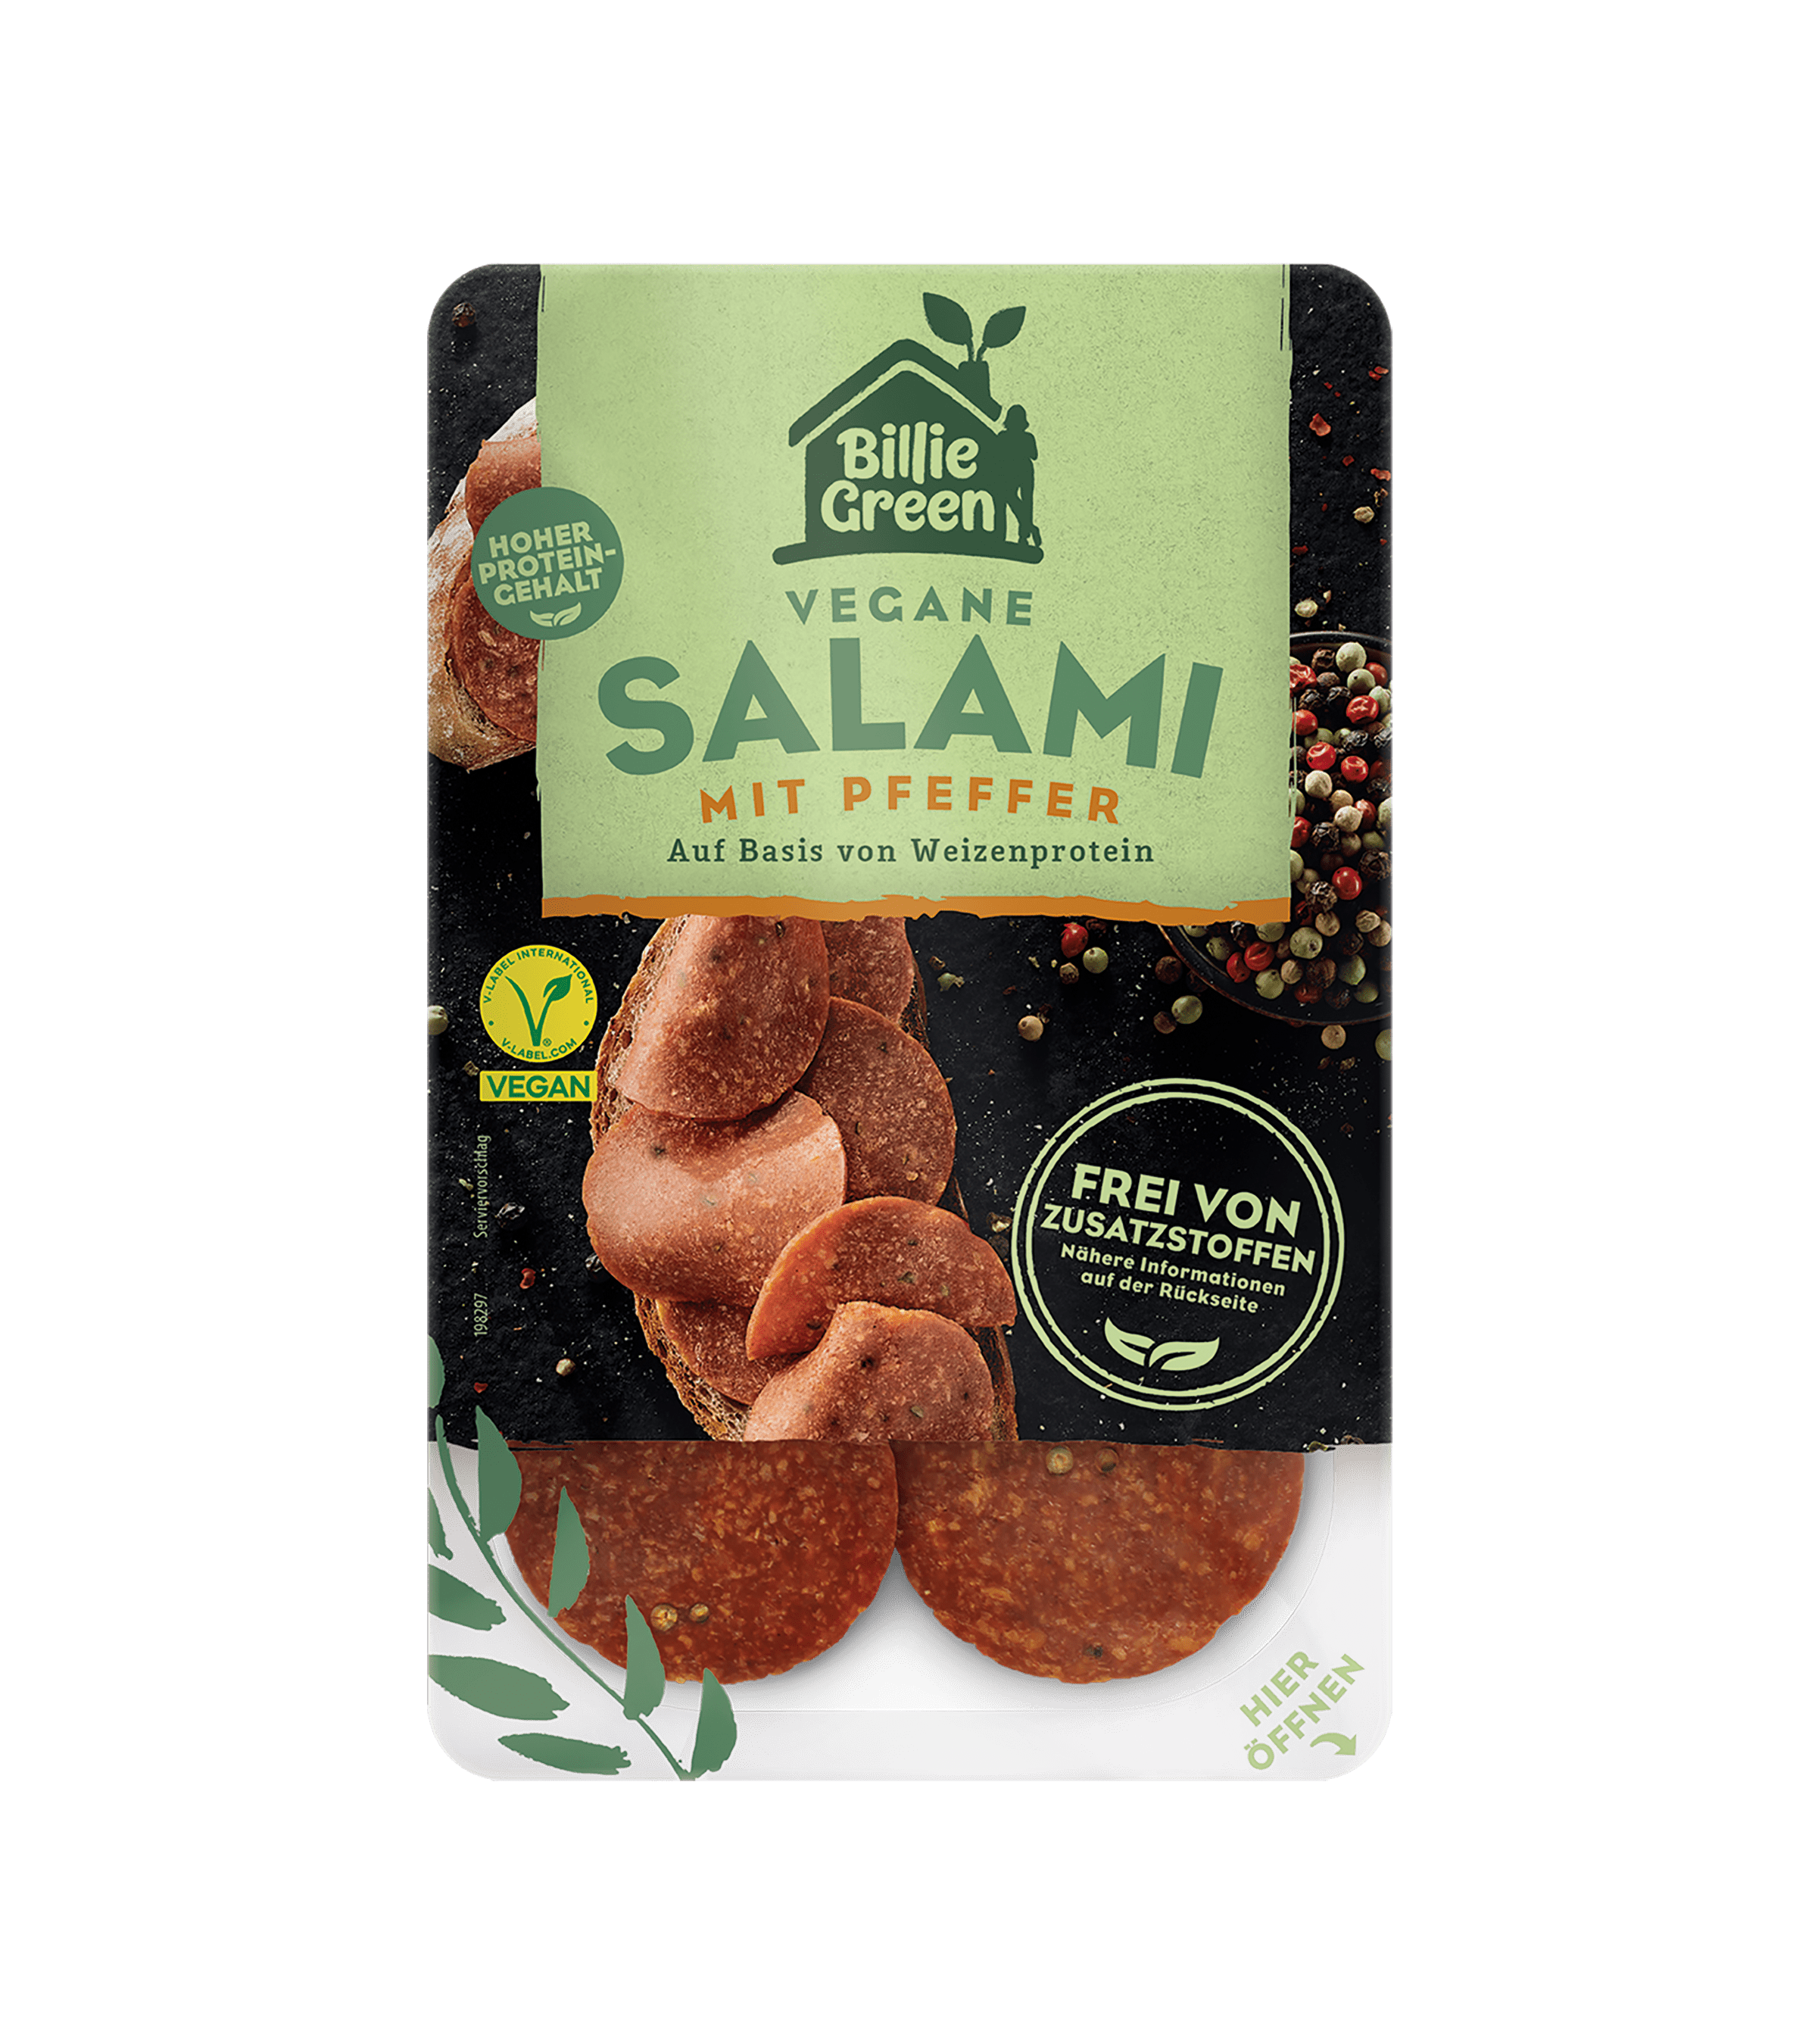 Vegane Salami mit Pfeffer, 70g